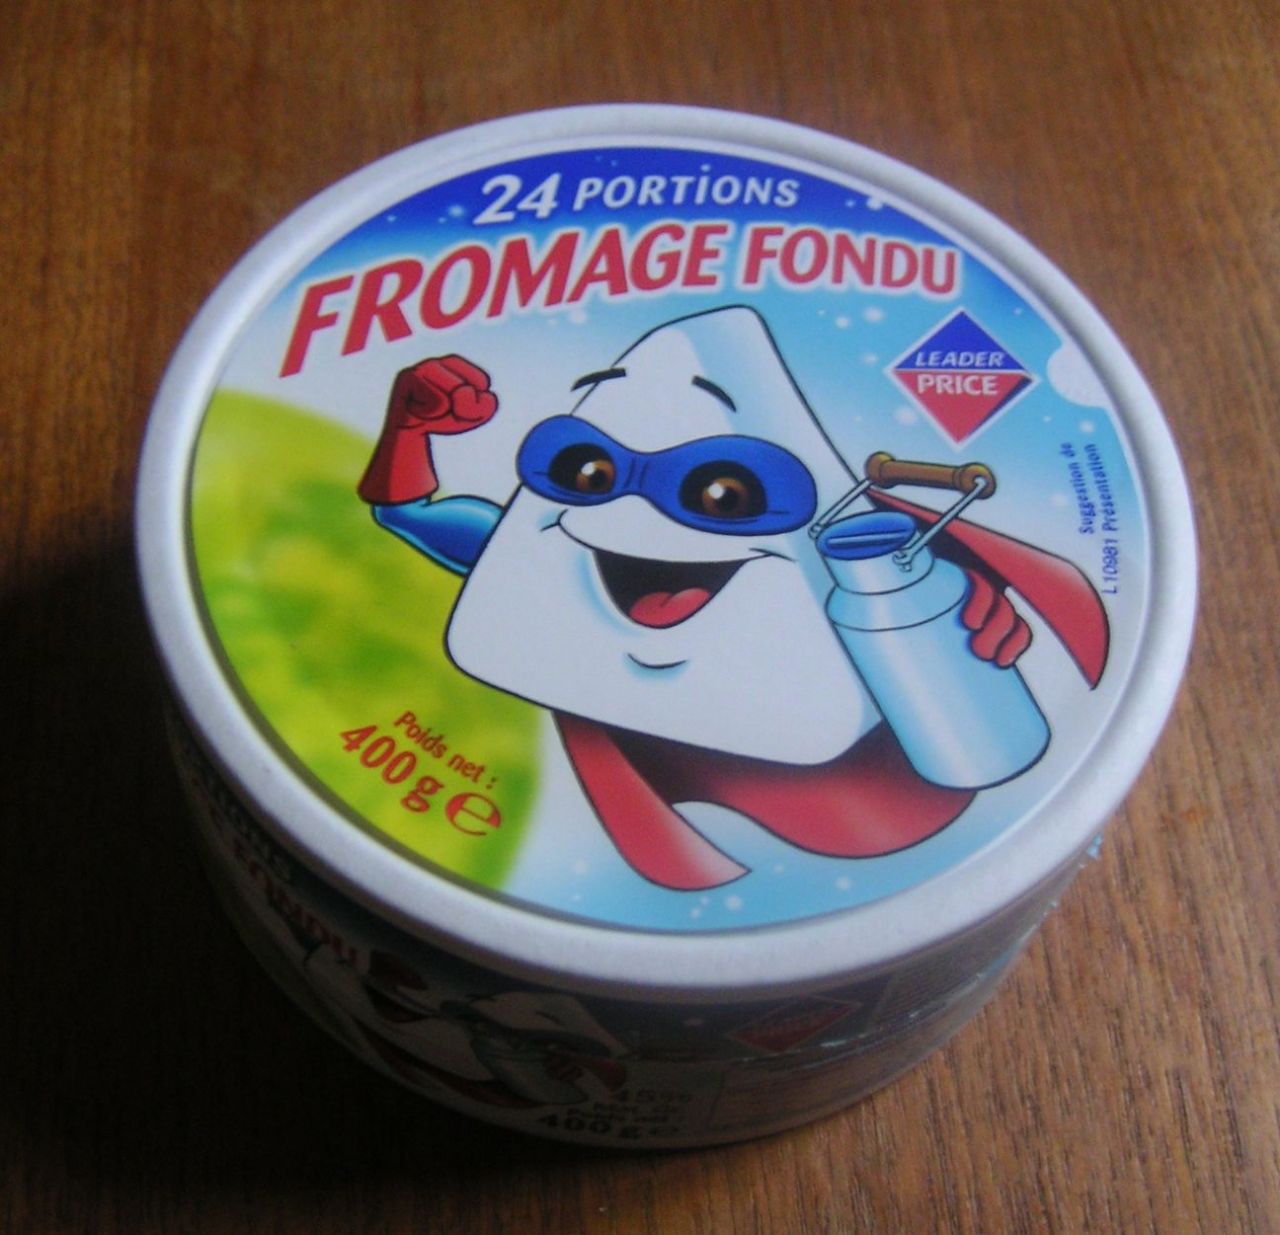 Fromage Fondu